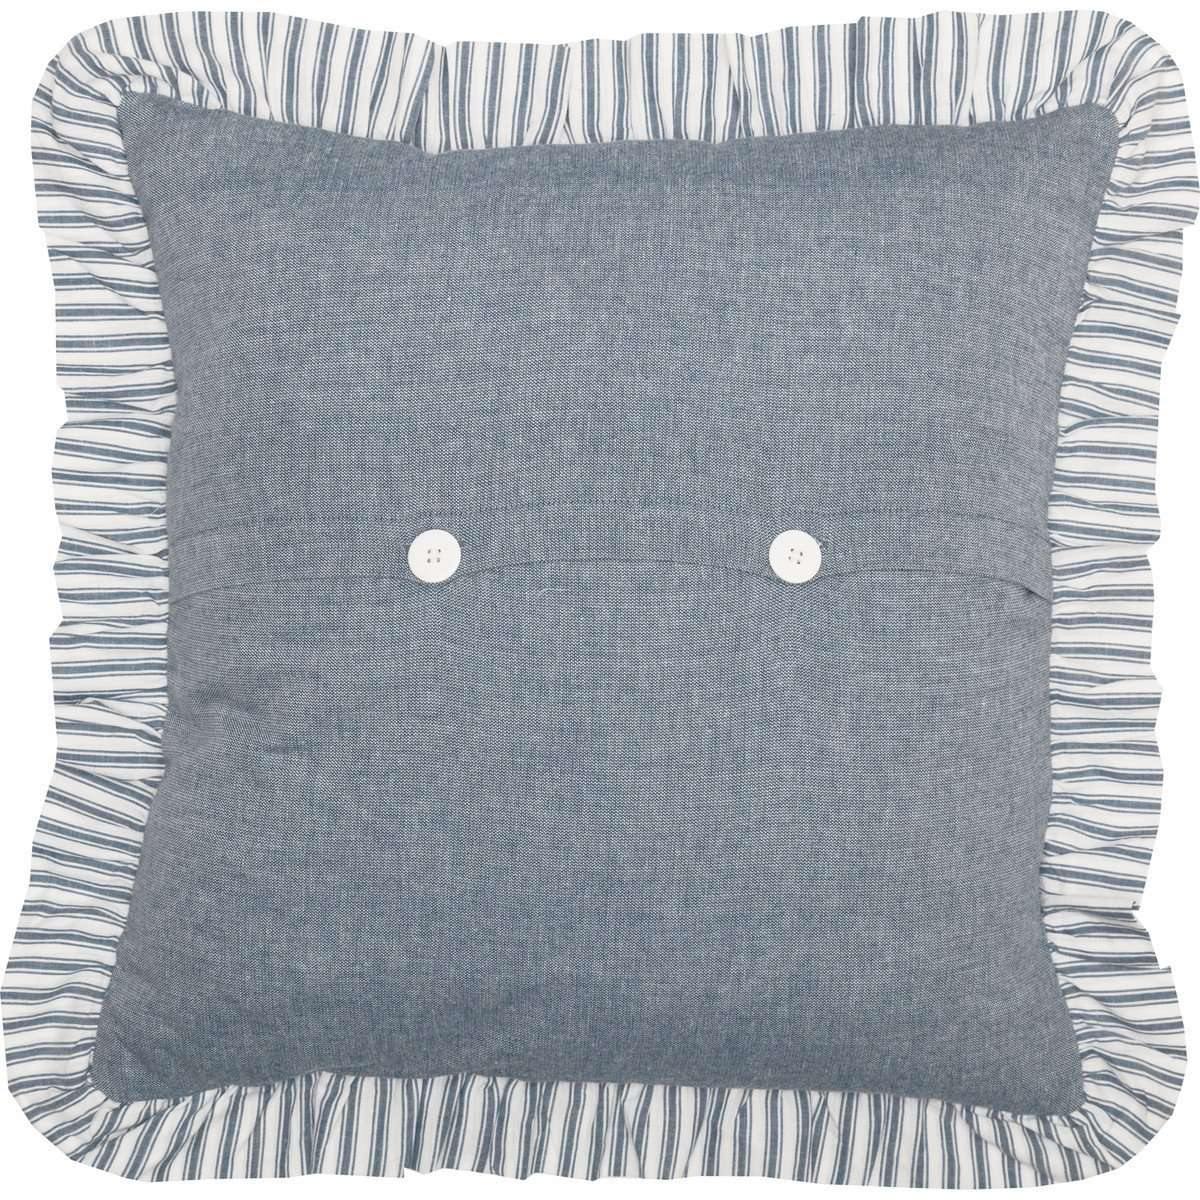 Sawyer Mill Blue Barn Star Pillow 18x18 VHC Brands back